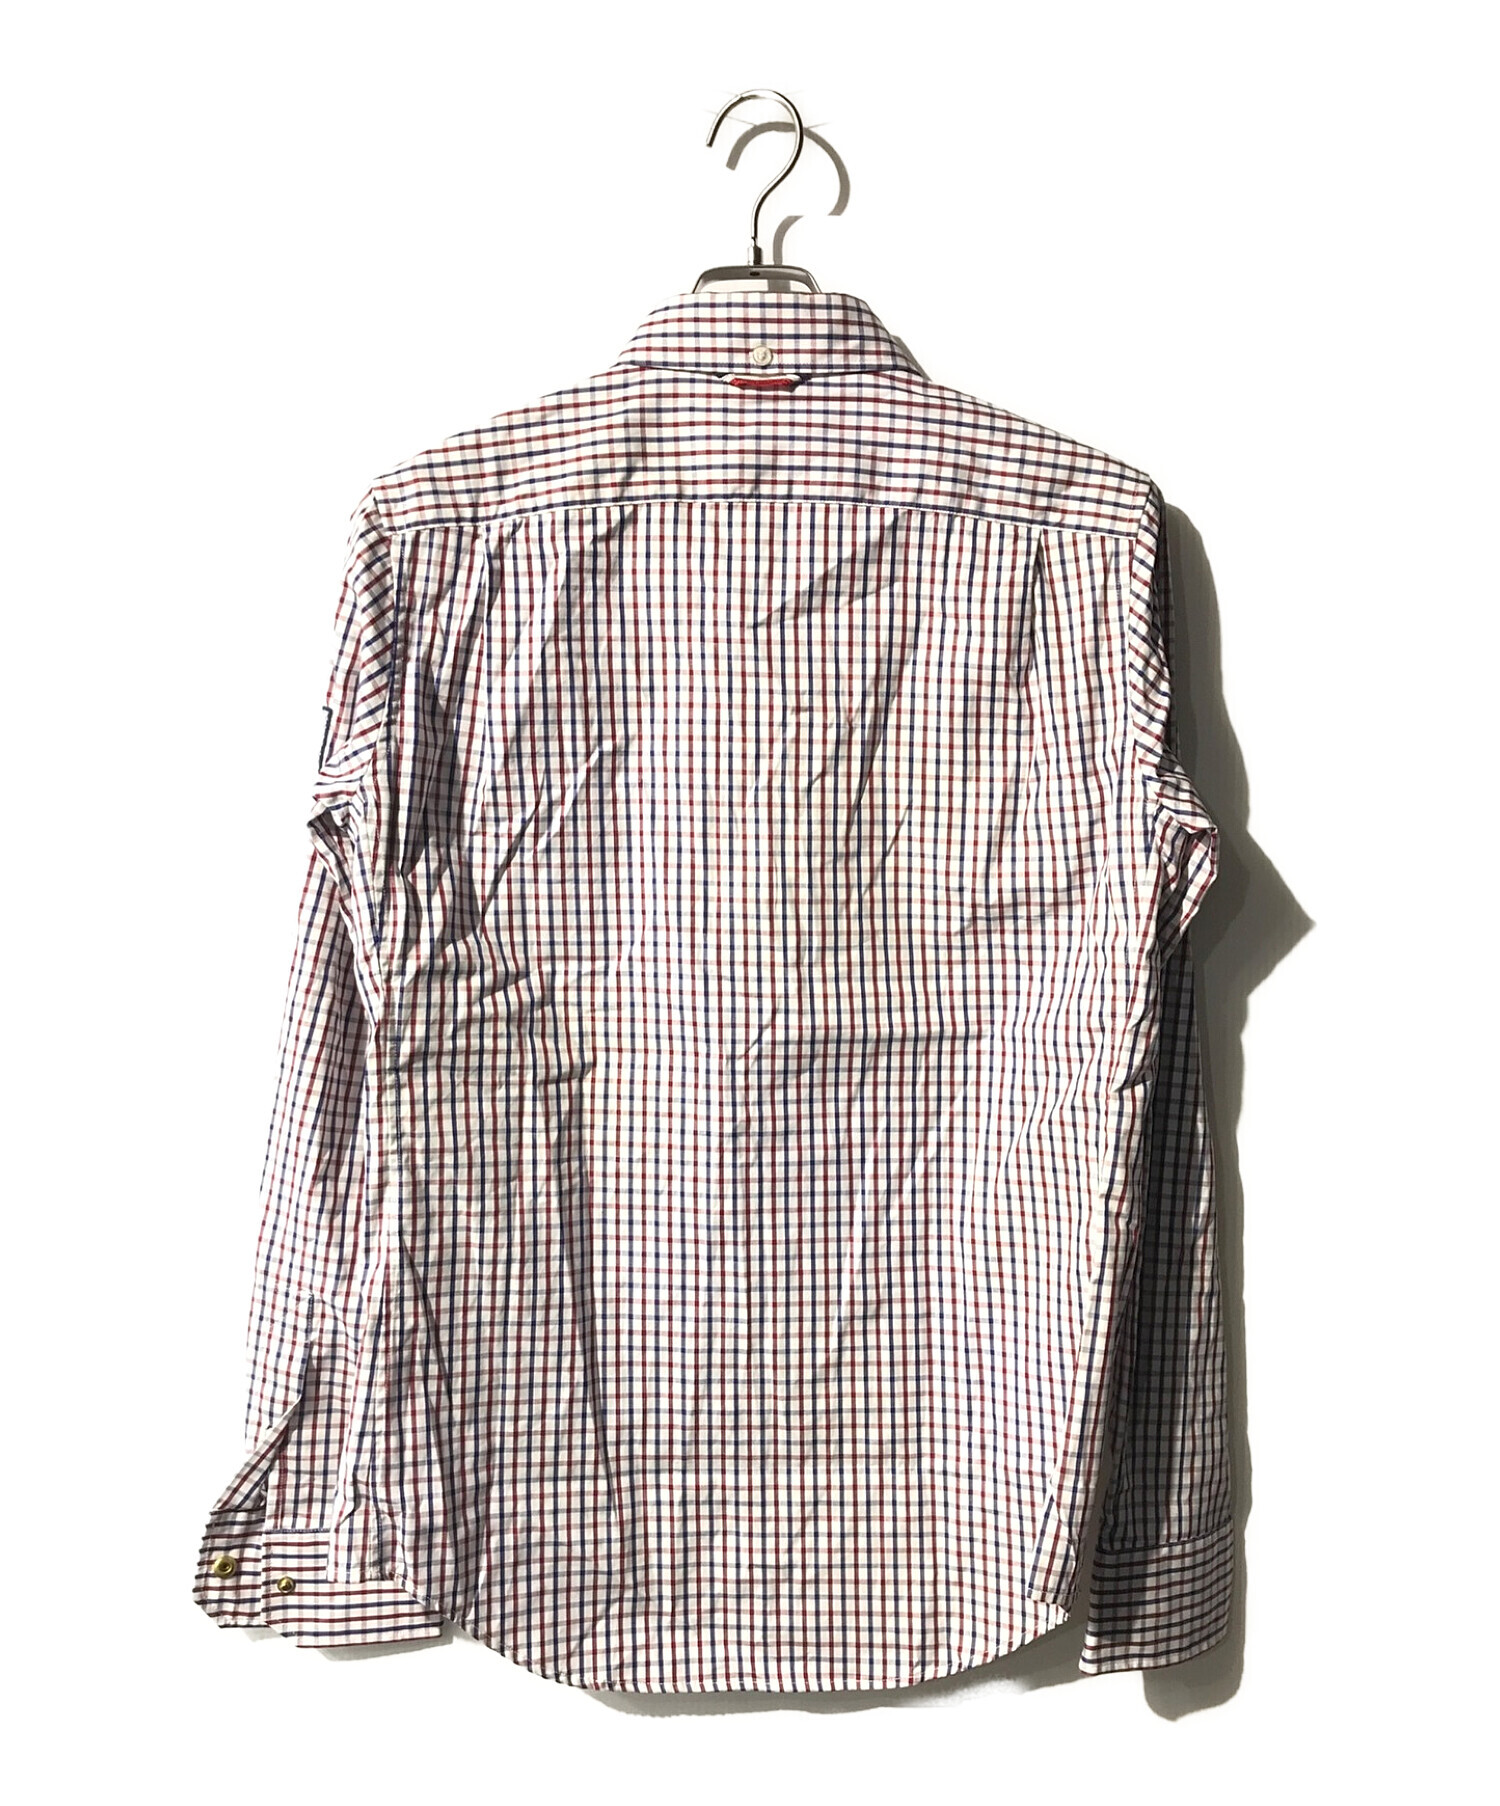 MONCLER GAMME BLEU (モンクレール ガム ブルー) ロゴパッチチェックシャツ レッド×ネイビー サイズ:1